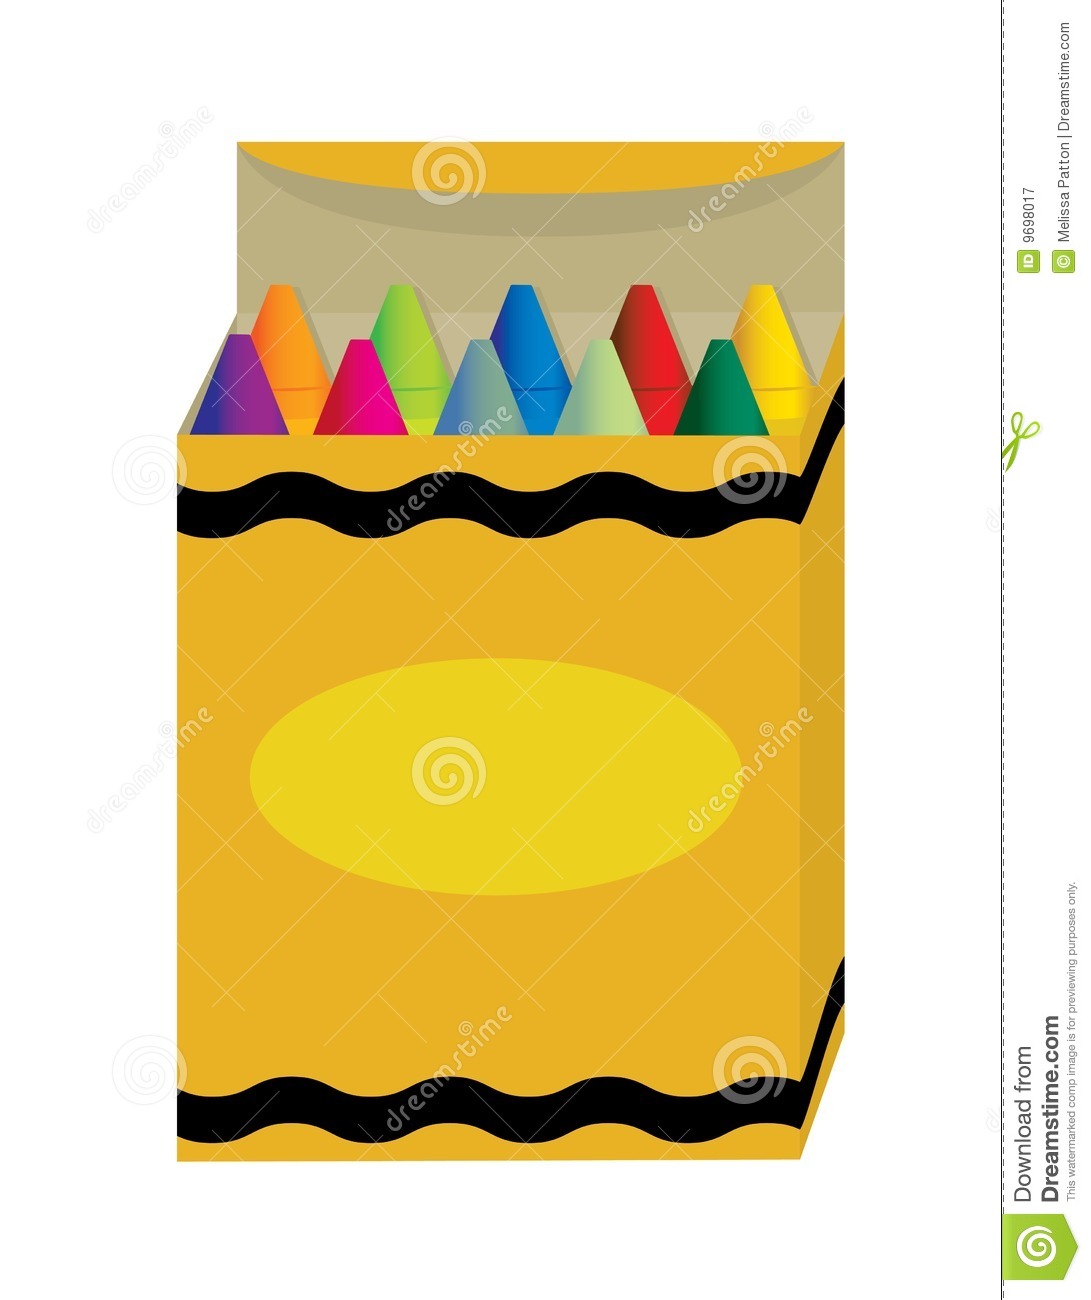 Box Of Crayons Royalty Free Stock Photography   Image  9698017